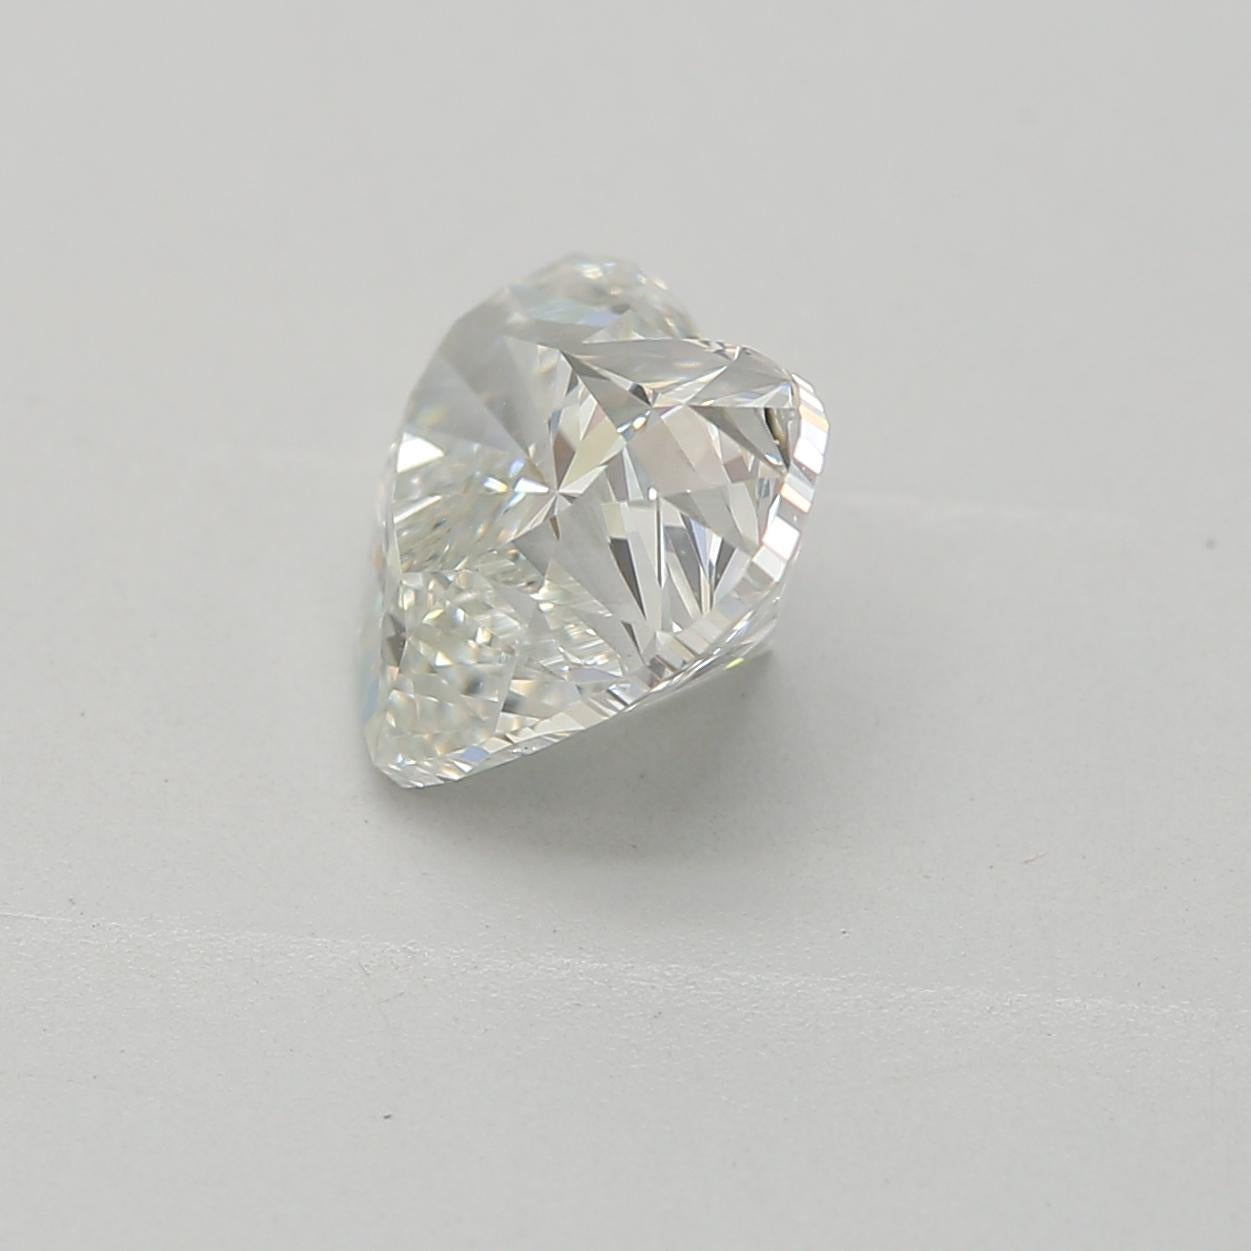 Heart Cut 1.00 Carat Very Light Green Heart shaped diamond VS1 Clarity GIA Certified For Sale